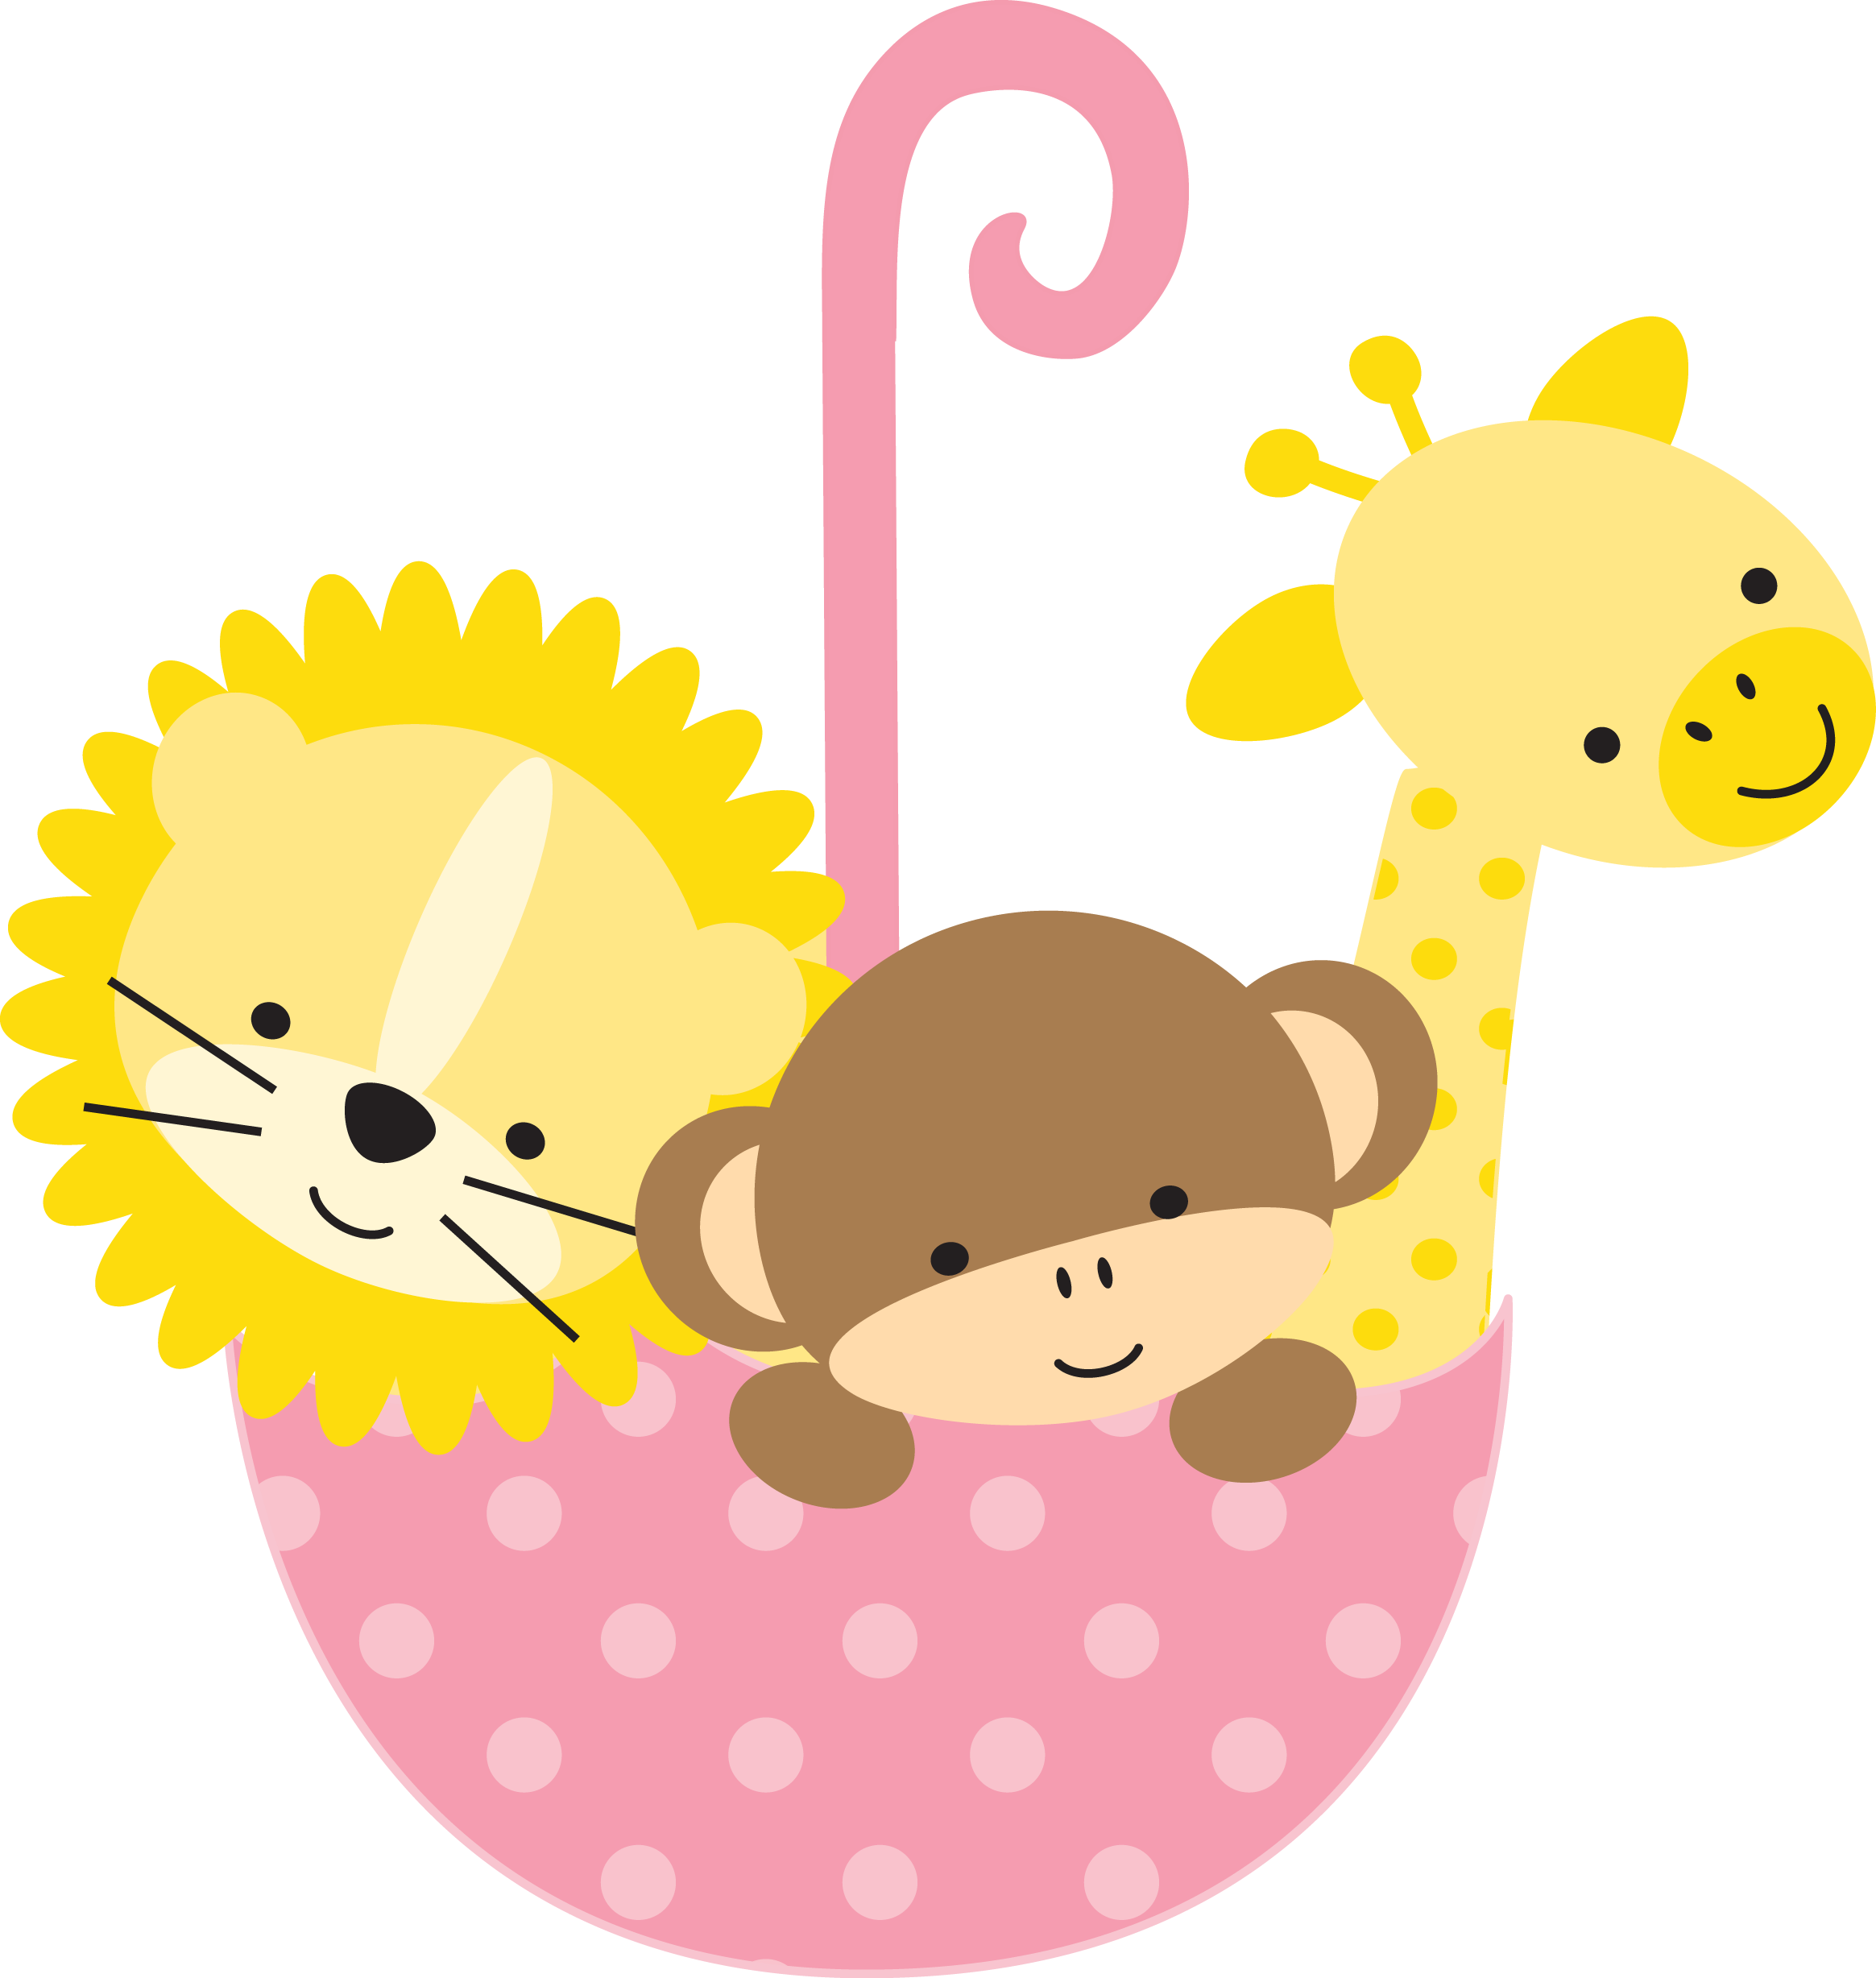 Infant Toy Teddy Bear Clip Art - Infant Toy Teddy Bear Clip Art (2329x2456)